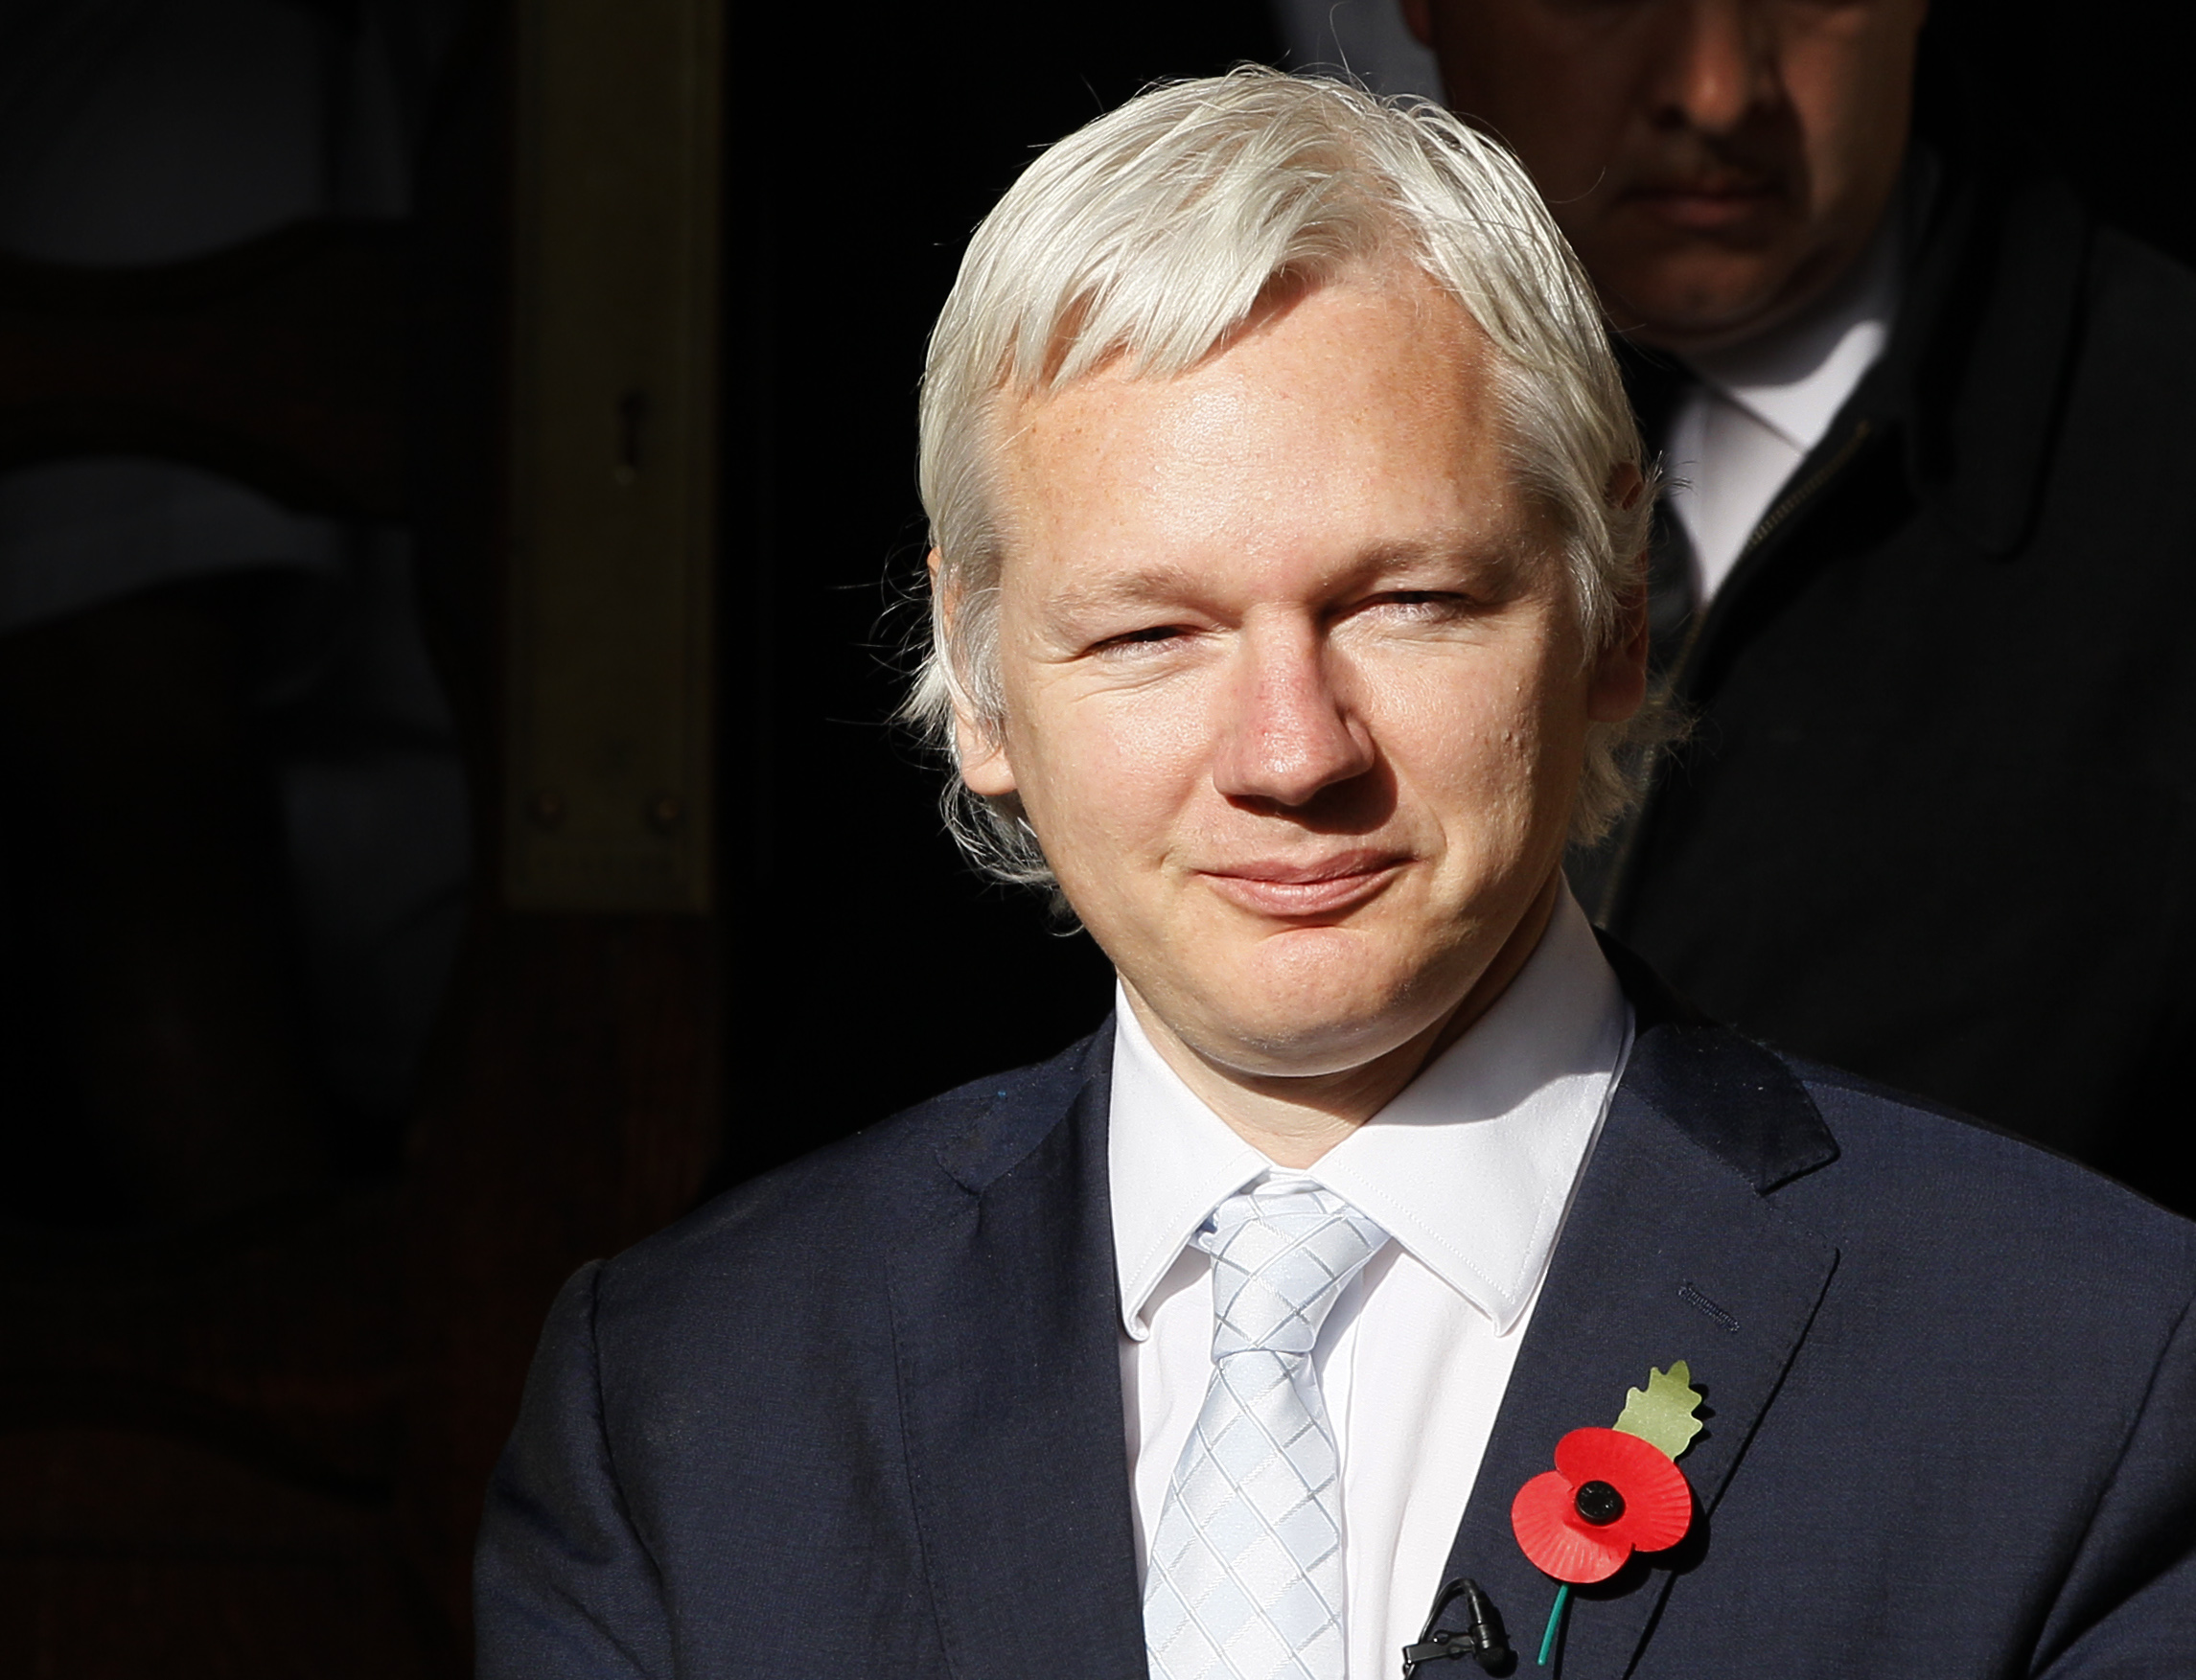 Vad tror du Julian Assange får i födelsedagspresent?